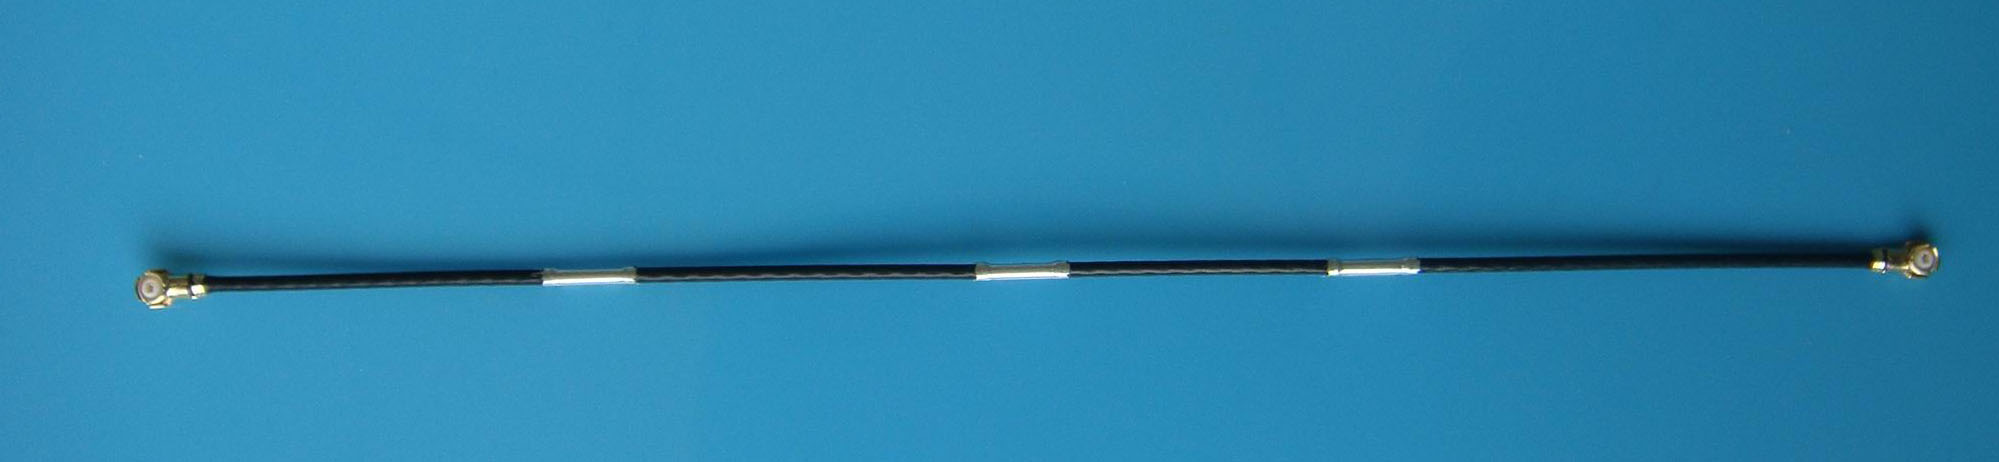 Ipex-Kabel 0,81 Micro-Koaxialkabel-Bodenklemmung